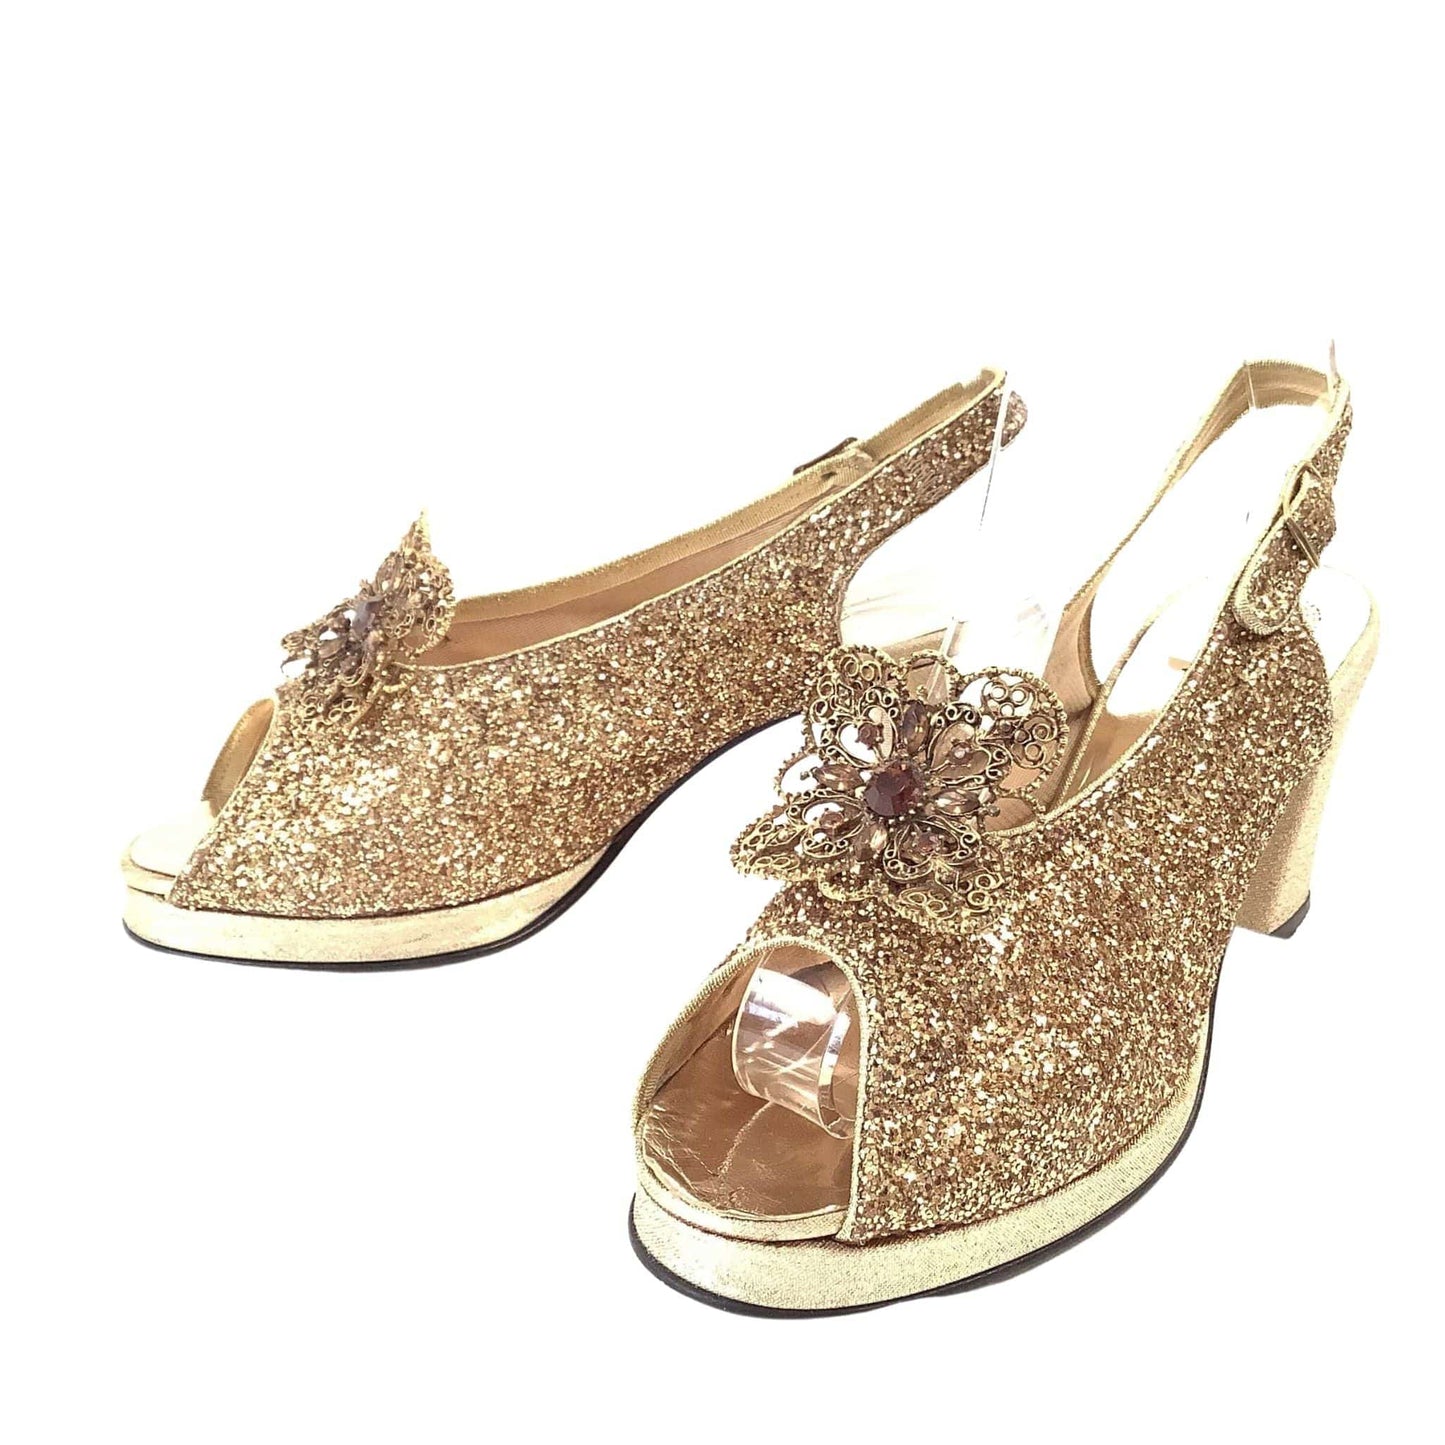 1940s Baroque Gold Heels 7.5 / Gold / Vintage 1940s